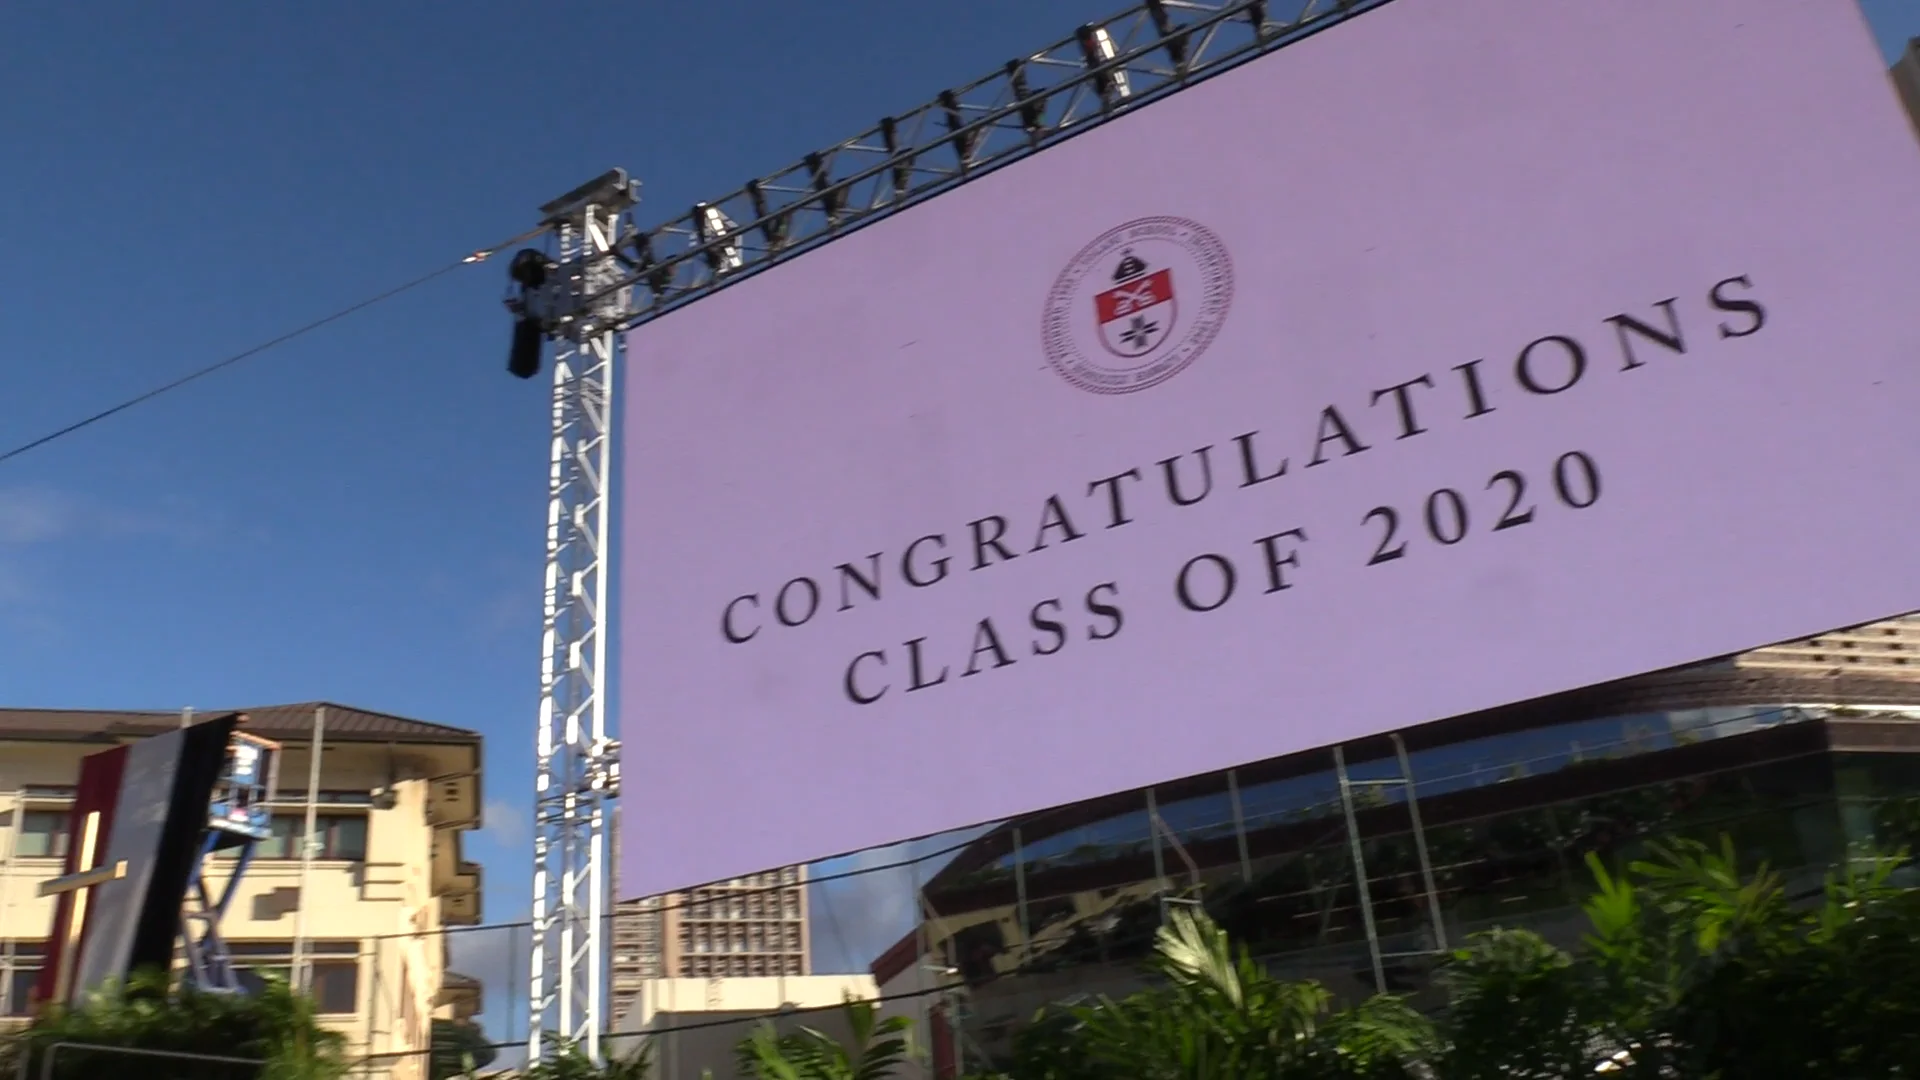 2020 Iolani Drive in Graduation on Vimeo